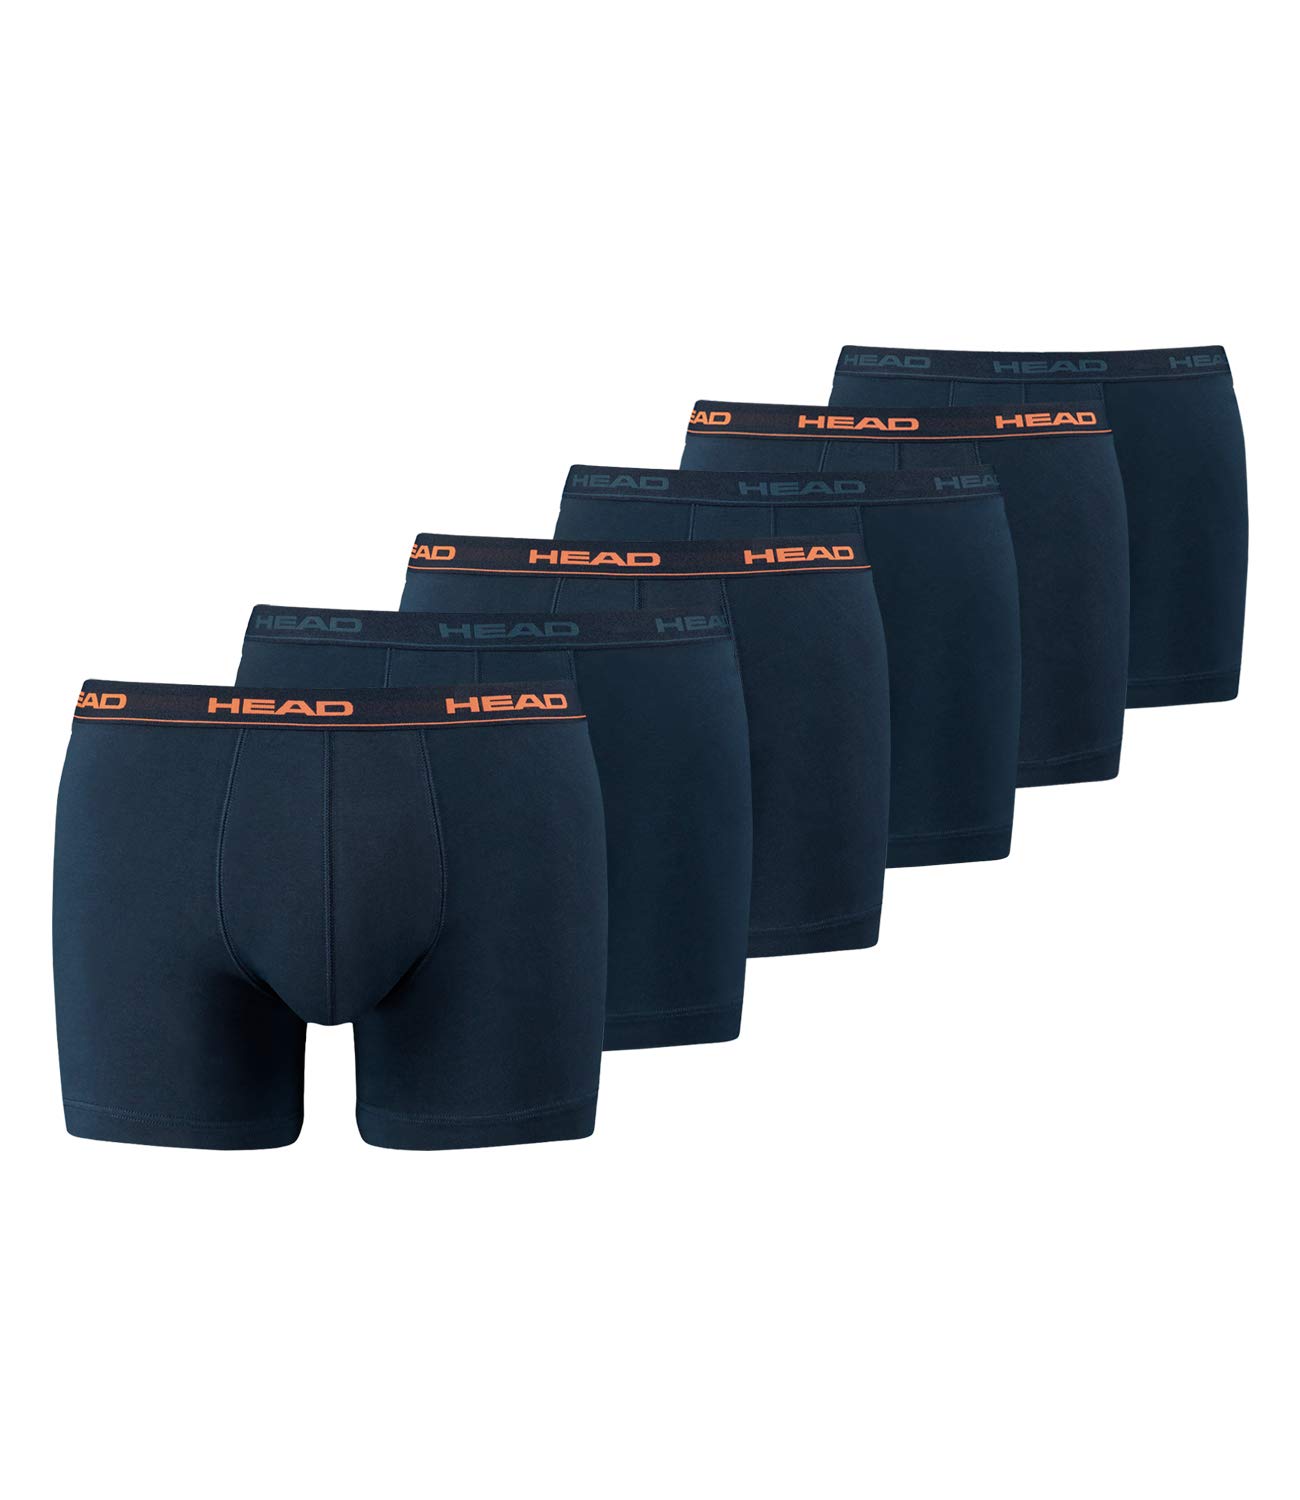 HEAD Herren Boxershorts Cotton Stretch 891003001 6er Pack, S, 493 - Peacoat/Orange